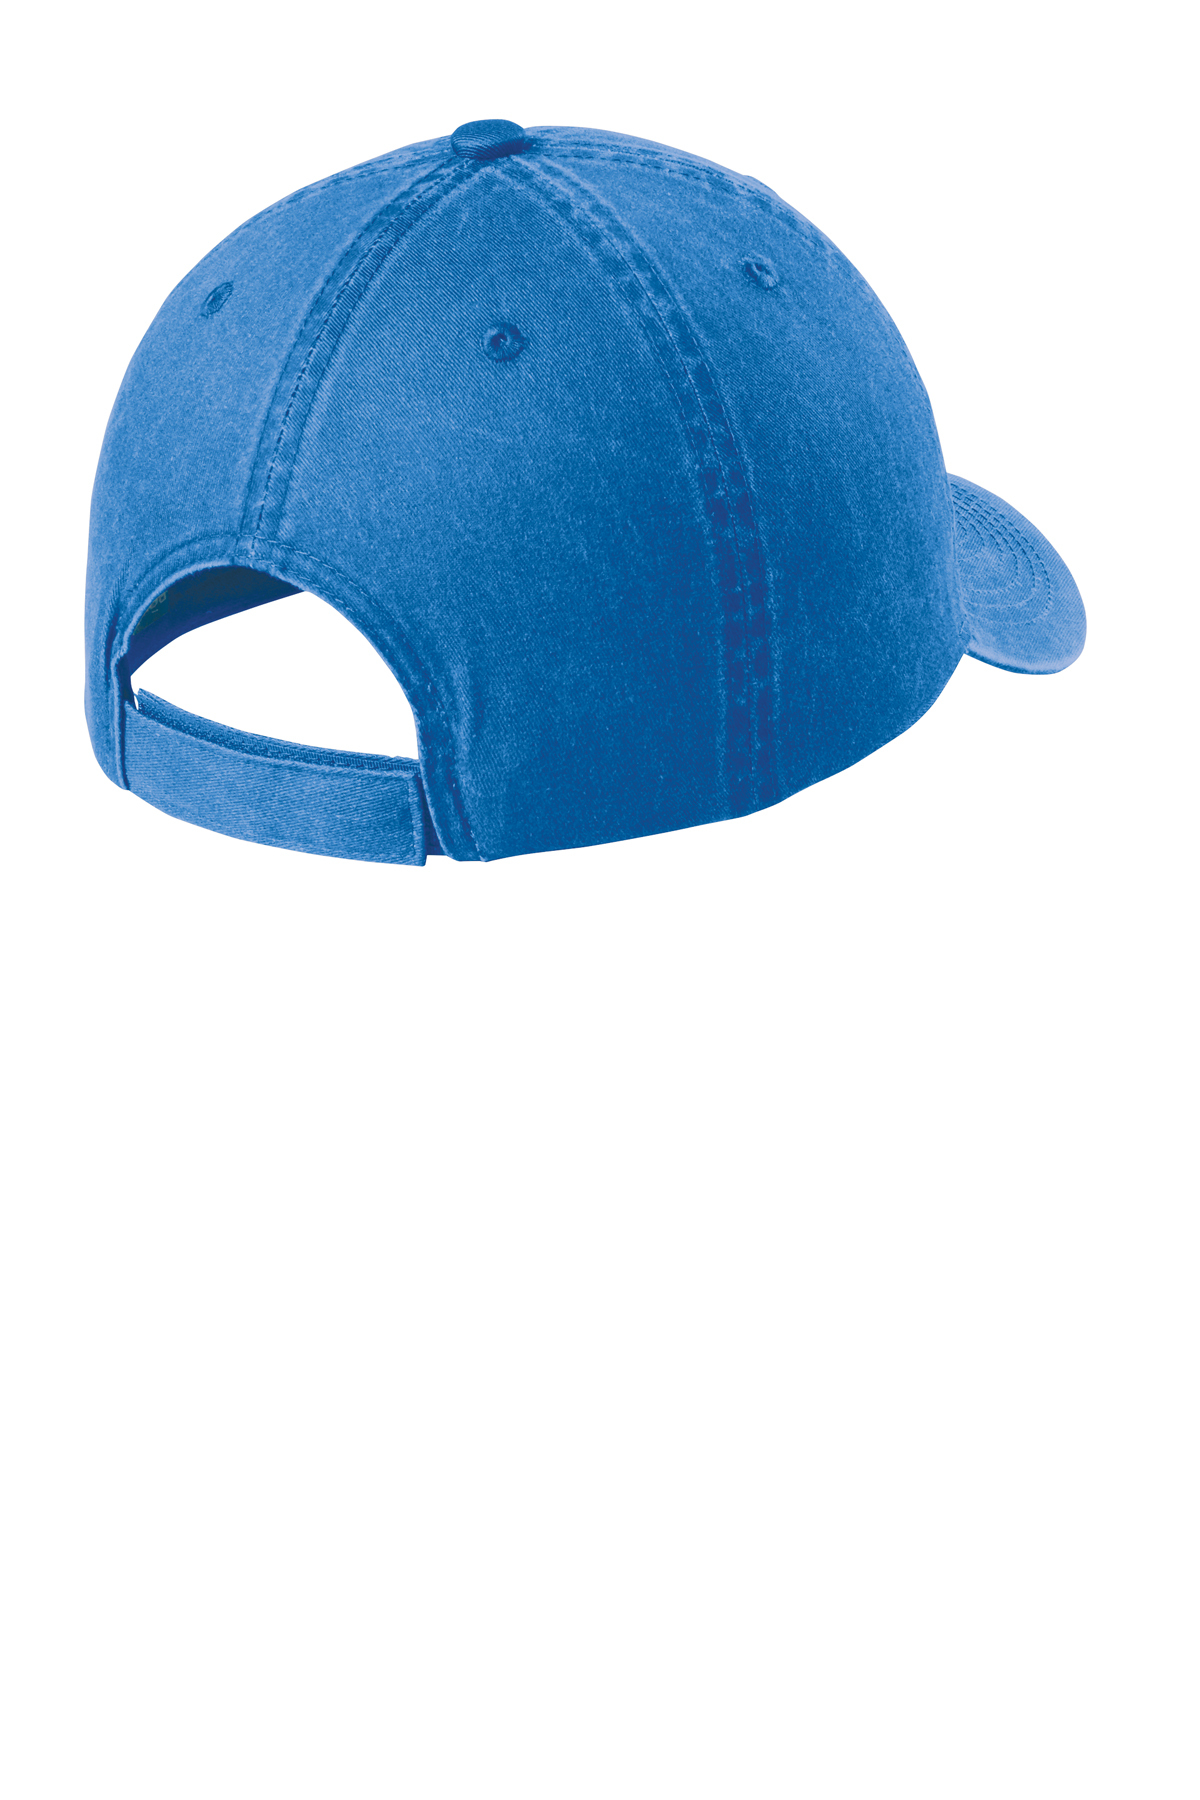 Blue Moon Hat Cap Dark Blue Hook & Loop Adjustment 